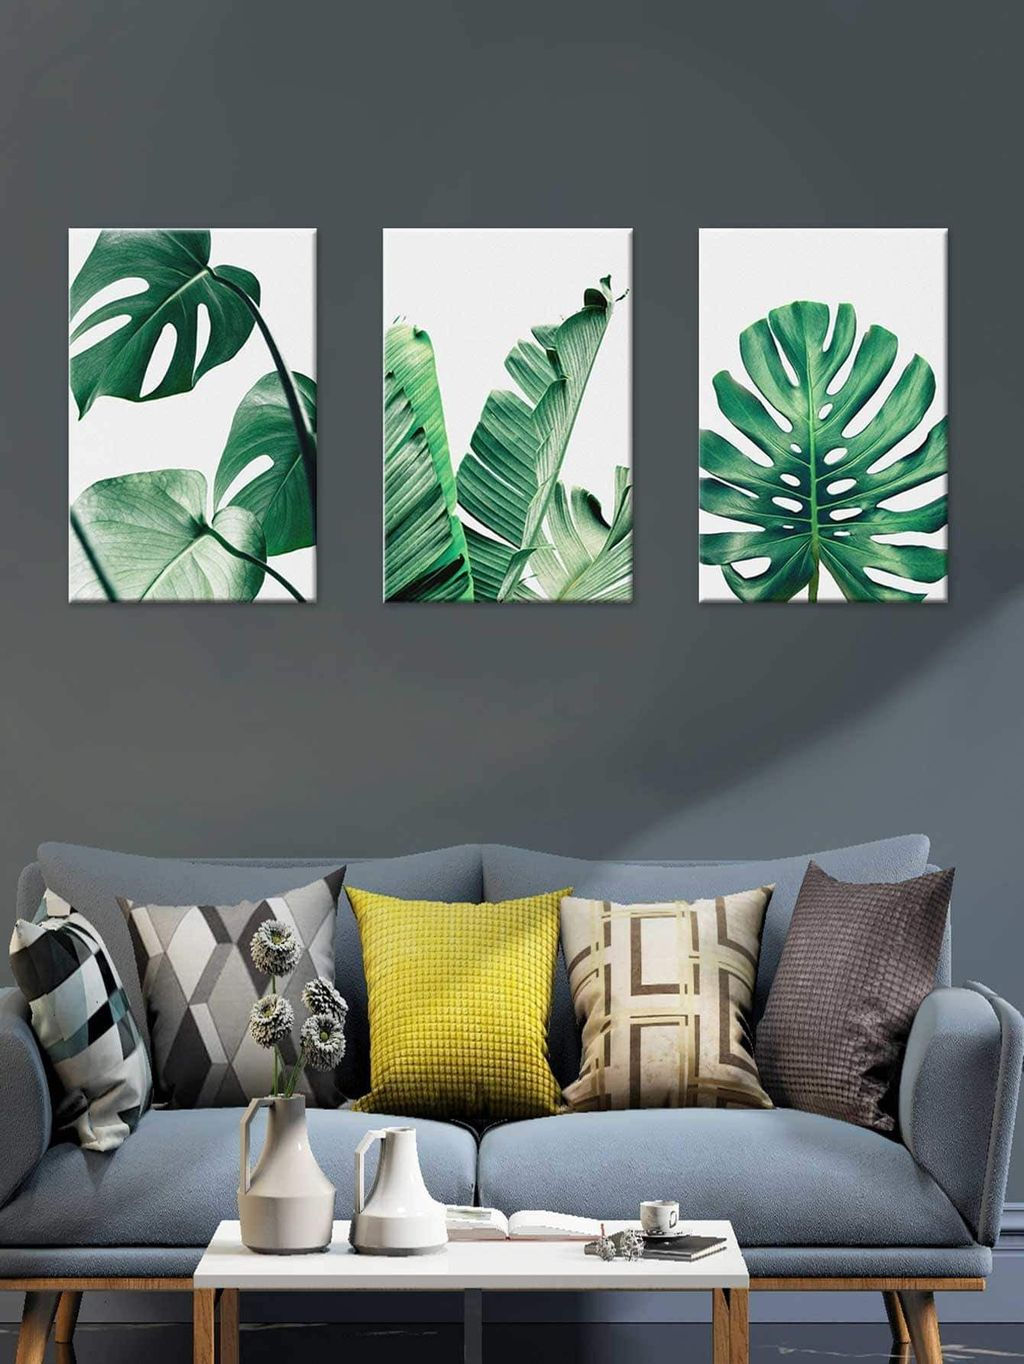 45 Splendid Tropical Leaf Decor Ideas For Home Design - DECORKEUN